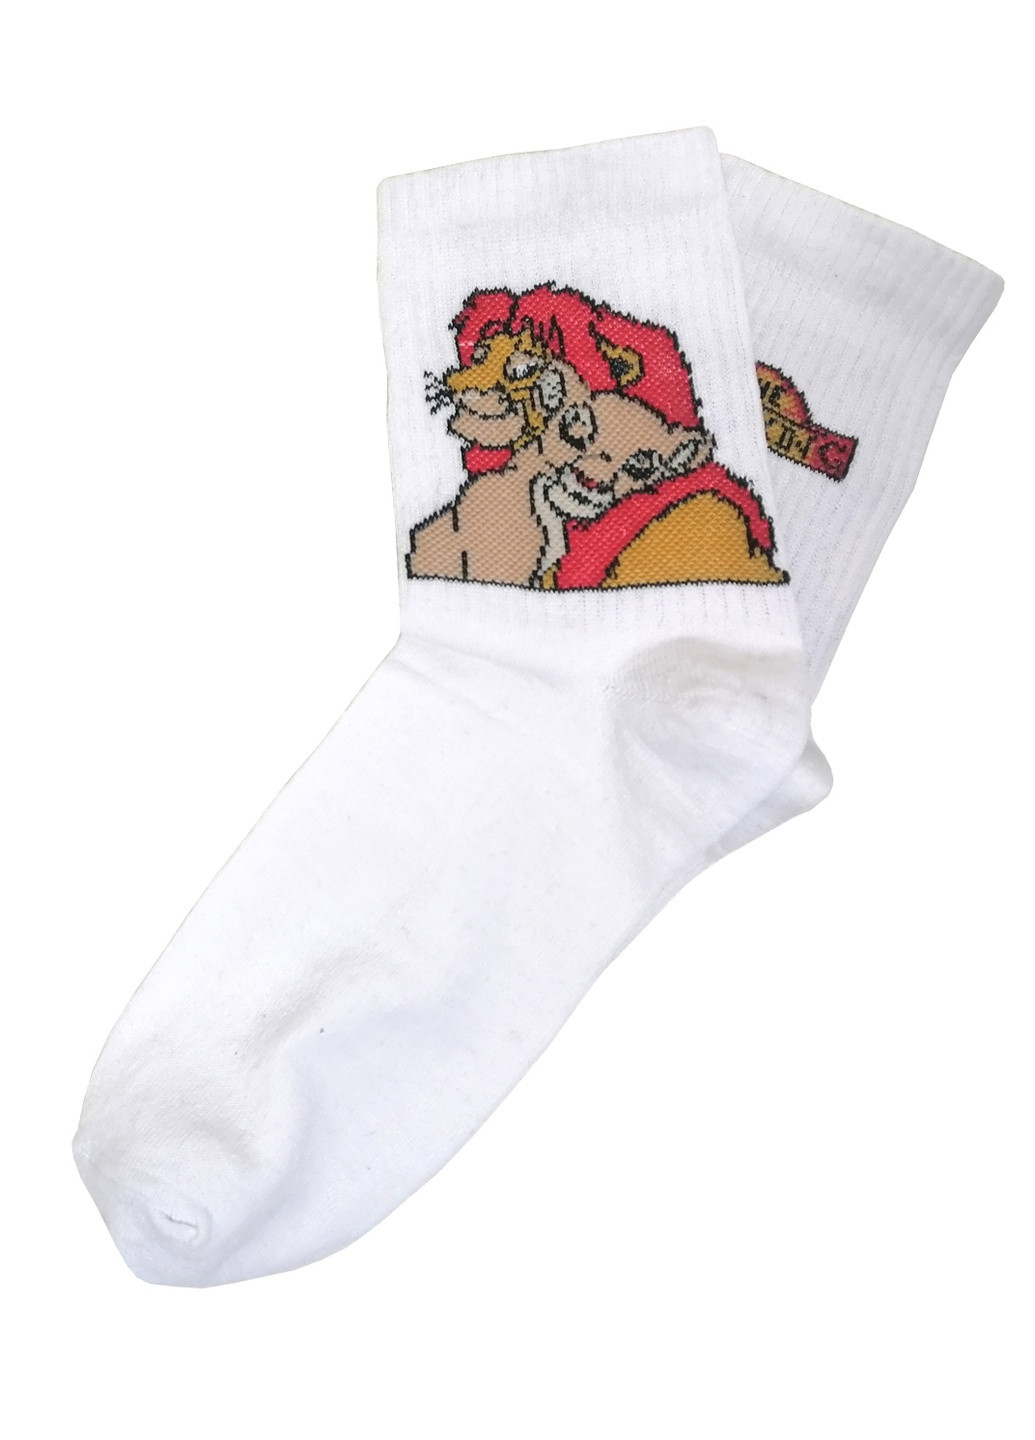 Носки Король Лев Rock'n'socks высокие (211258740)